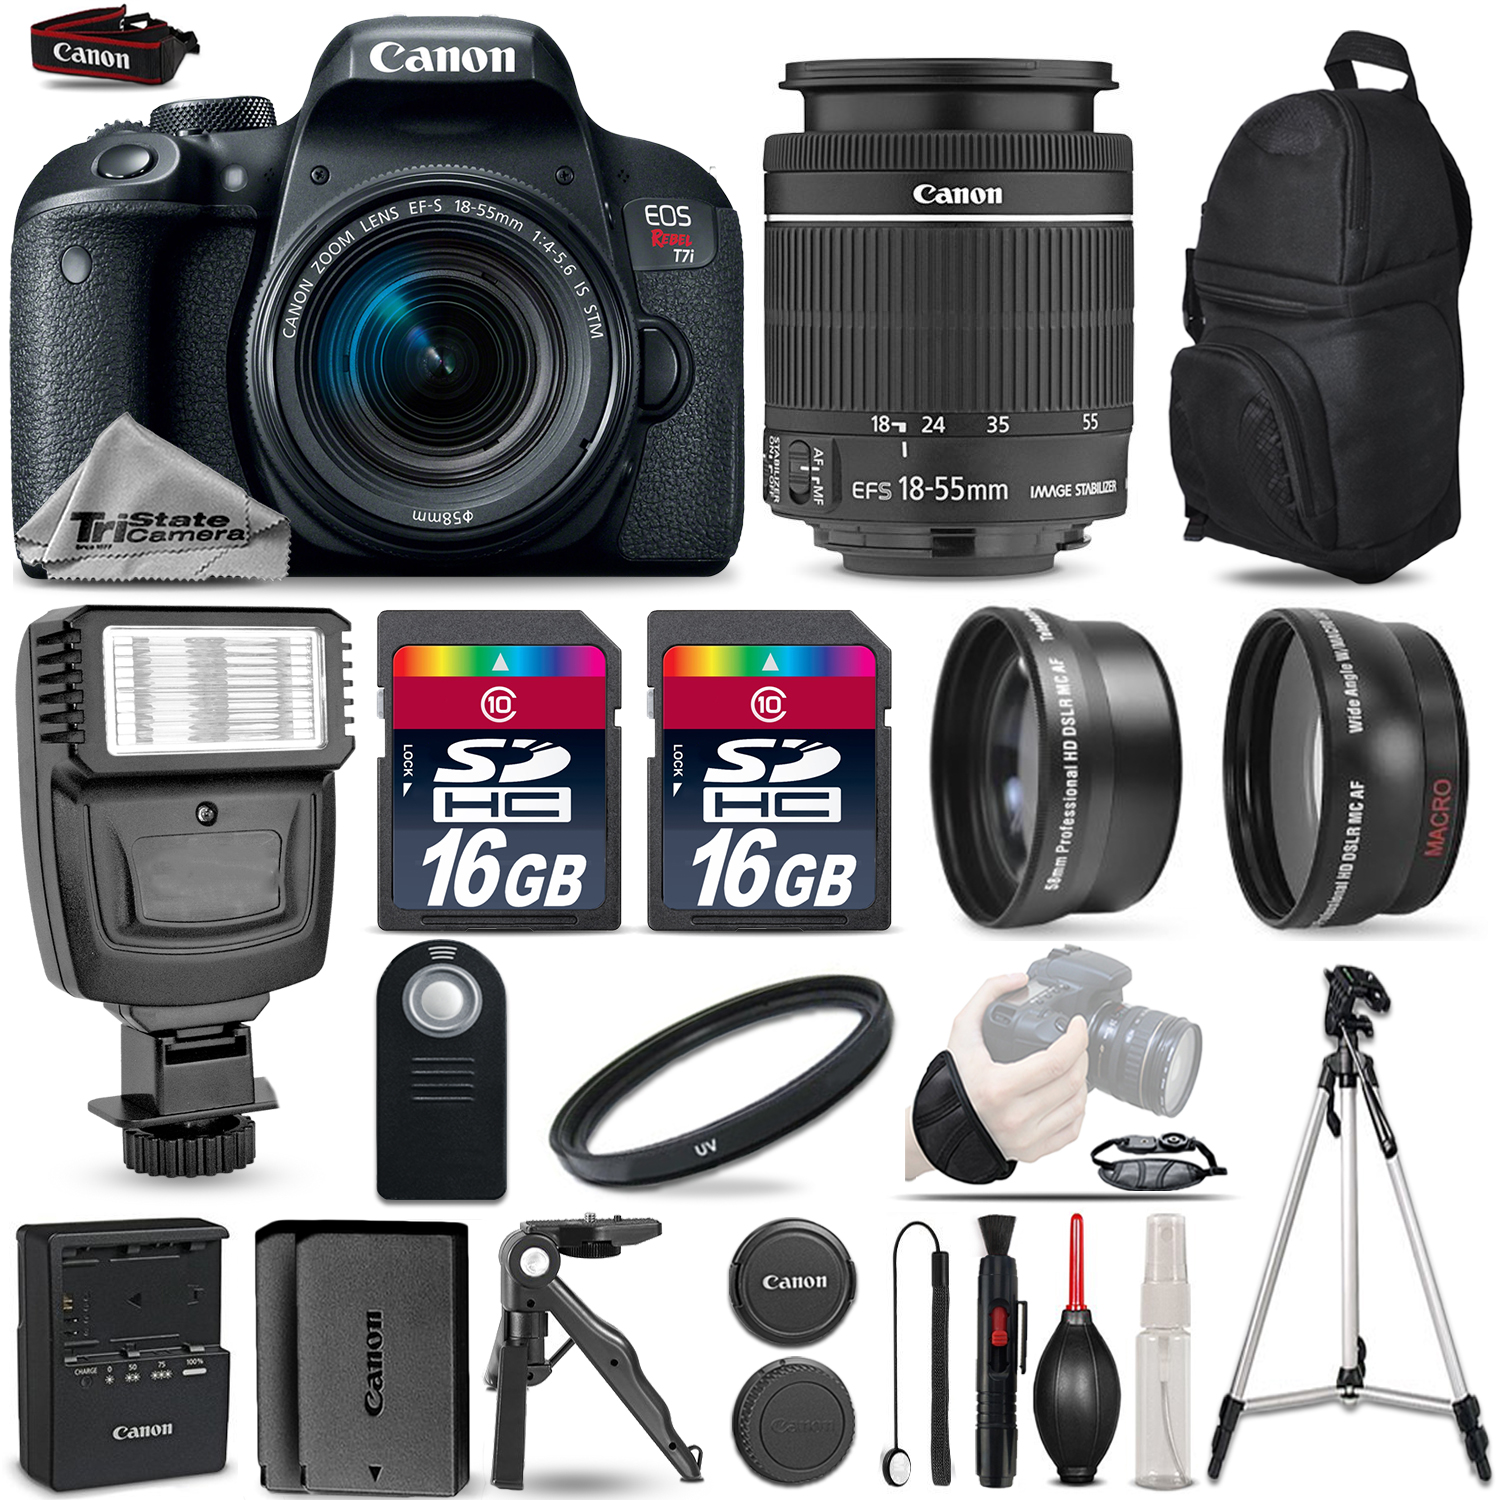 EOS Rebel T7i Camera 800D + 18-55mm IS-3 Lens Kit + Flash+ 32GB + EXT BATT *FREE SHIPPING*